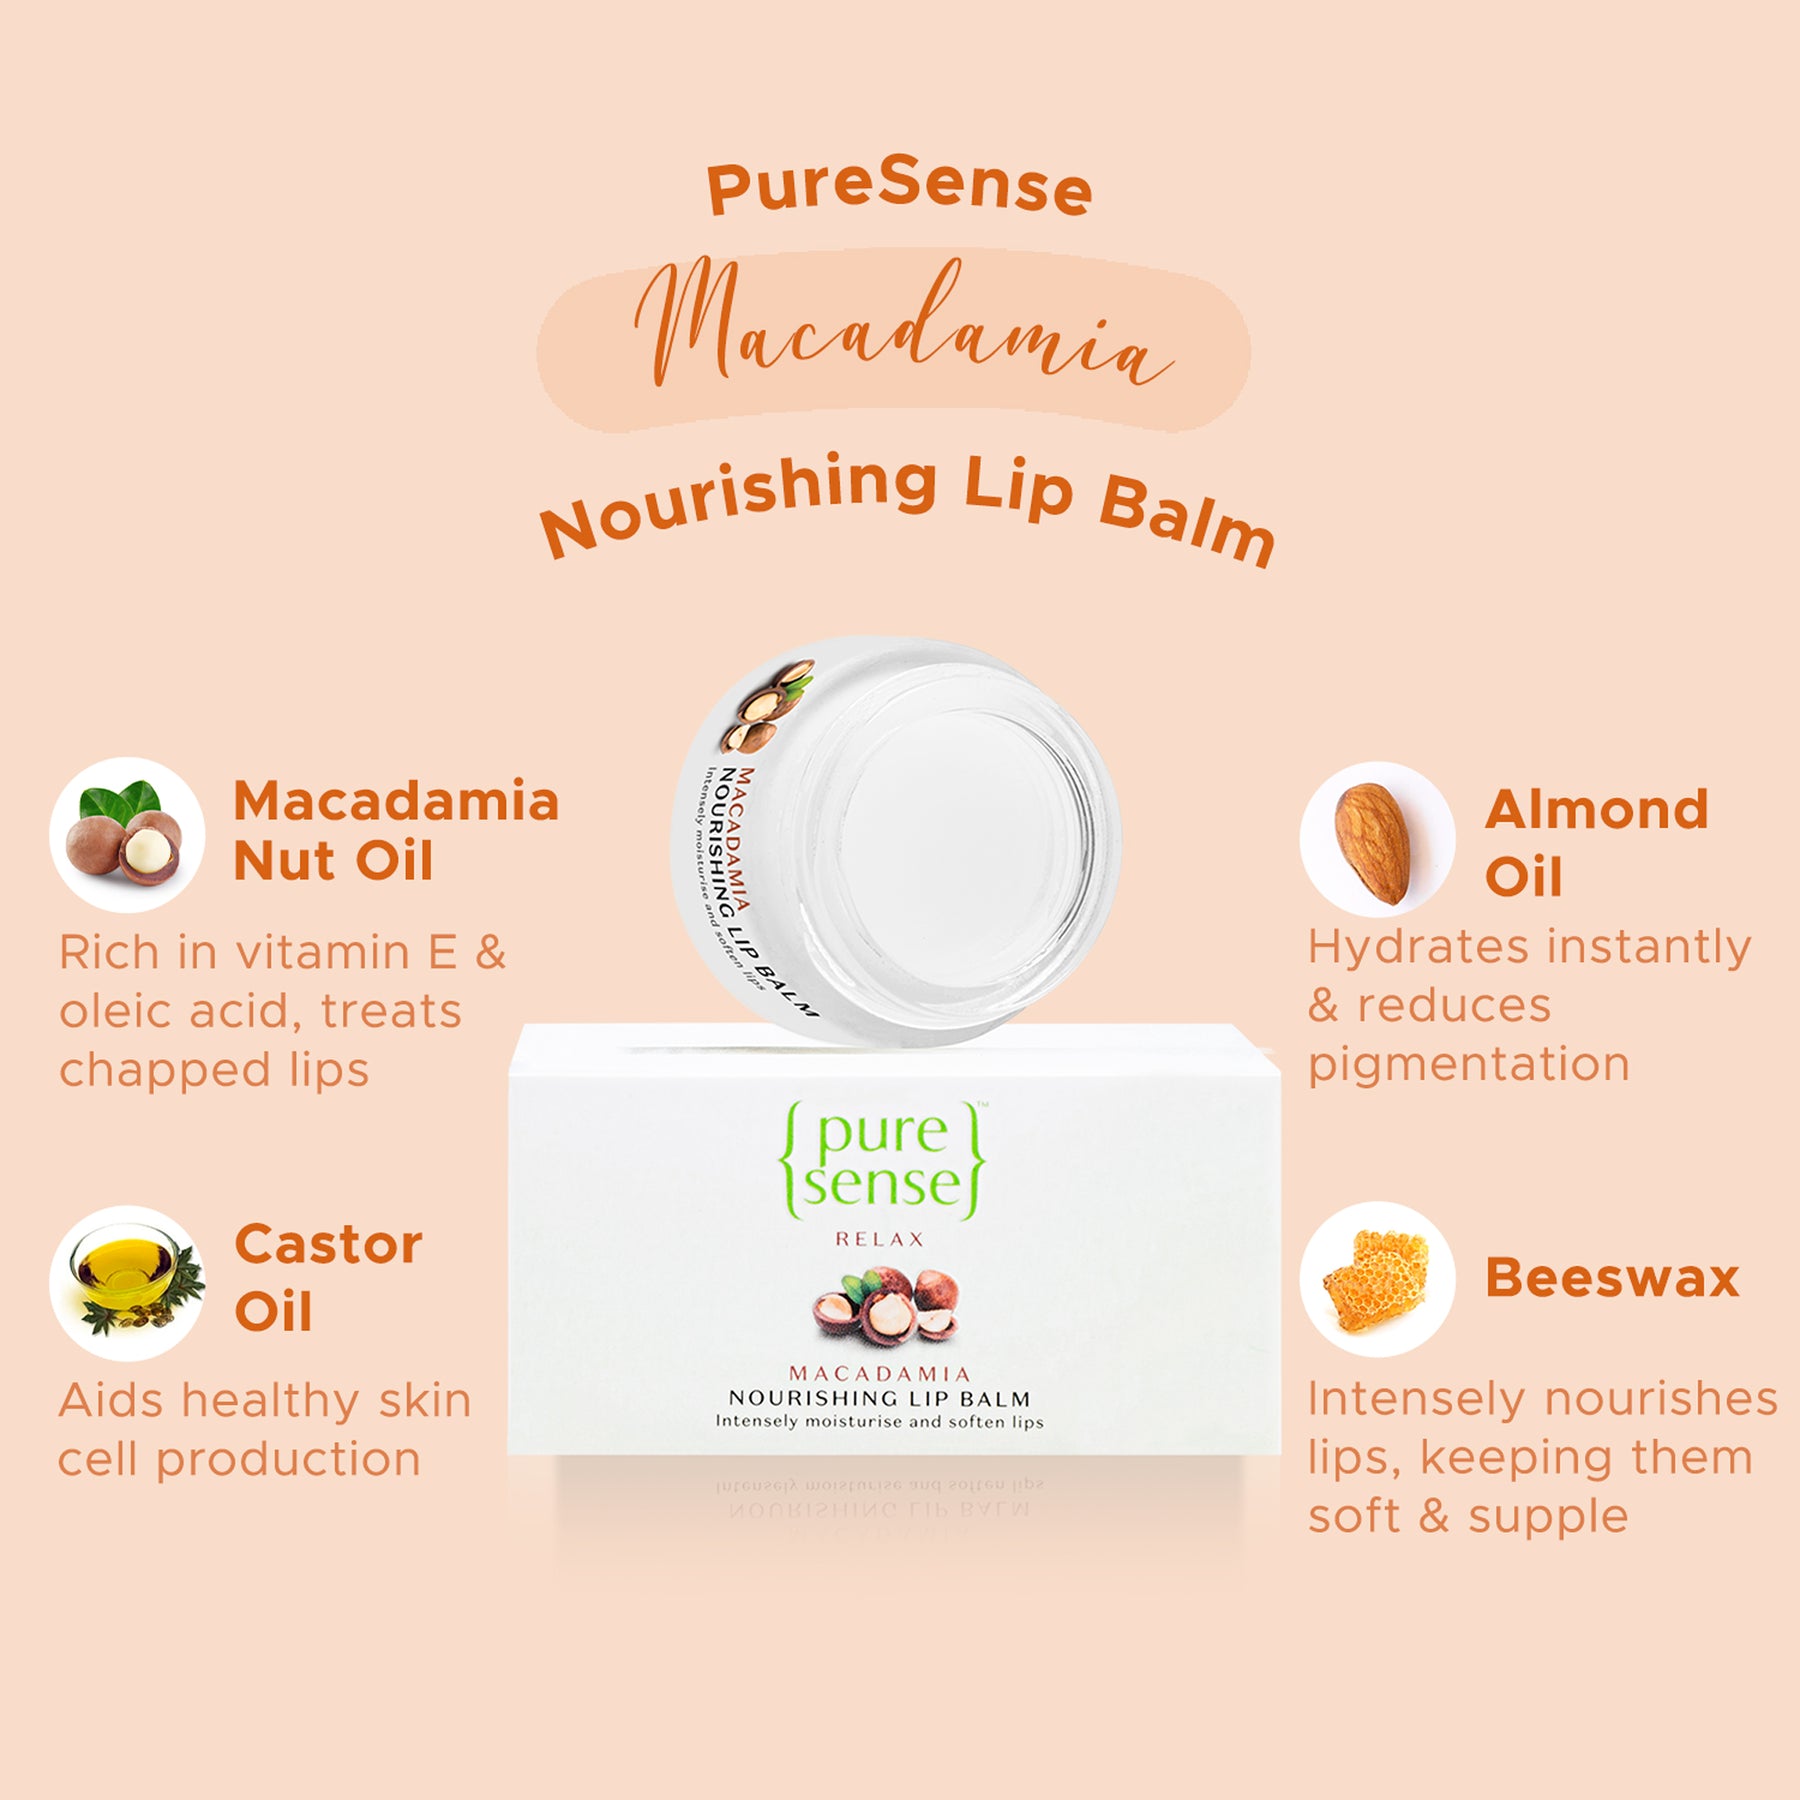 Macadamia Nourishing Lip Balm | From the makers of Parachute Advansed | 5ml - PureSense